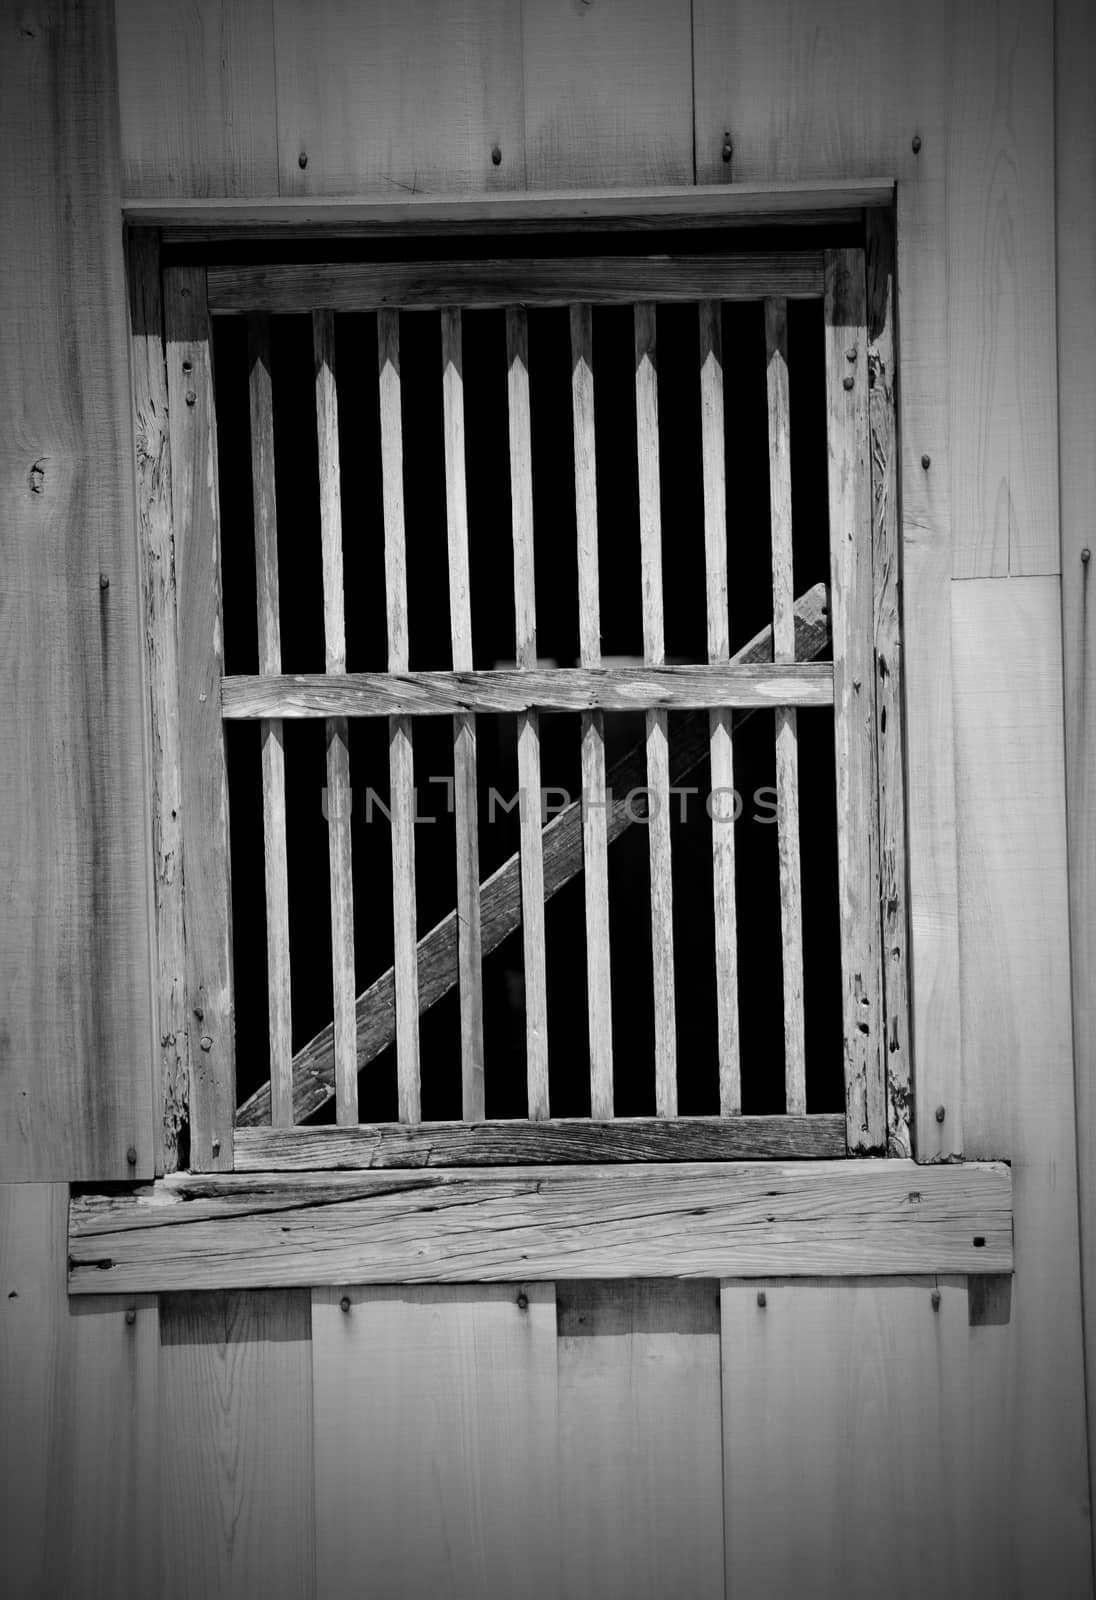 old west jail window